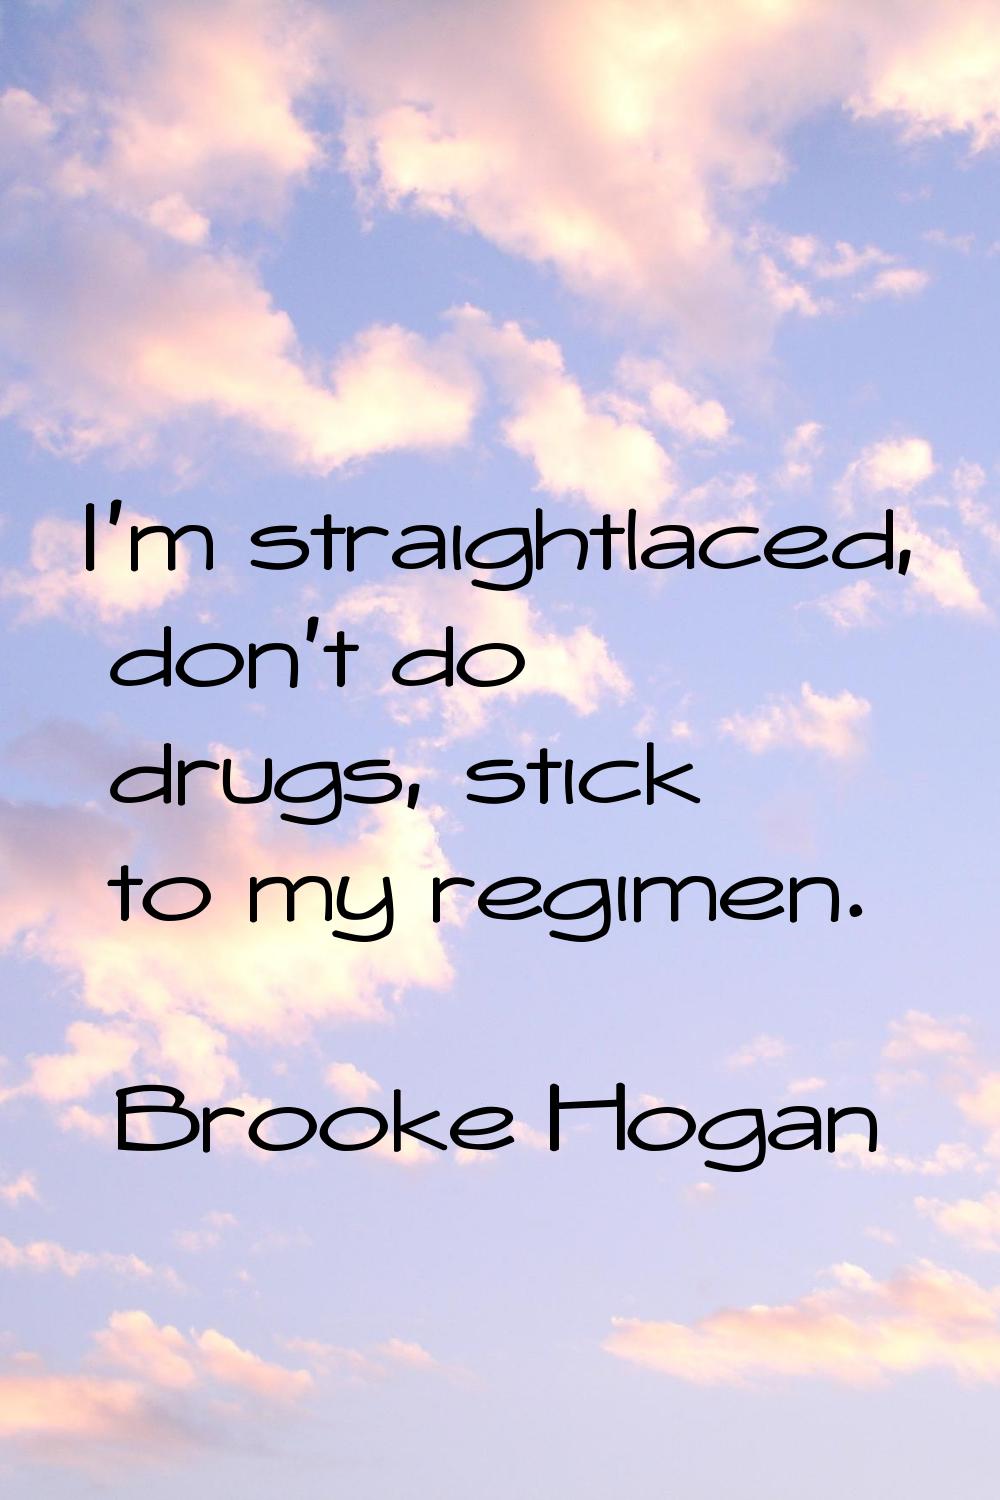 I'm straightlaced, don't do drugs, stick to my regimen.